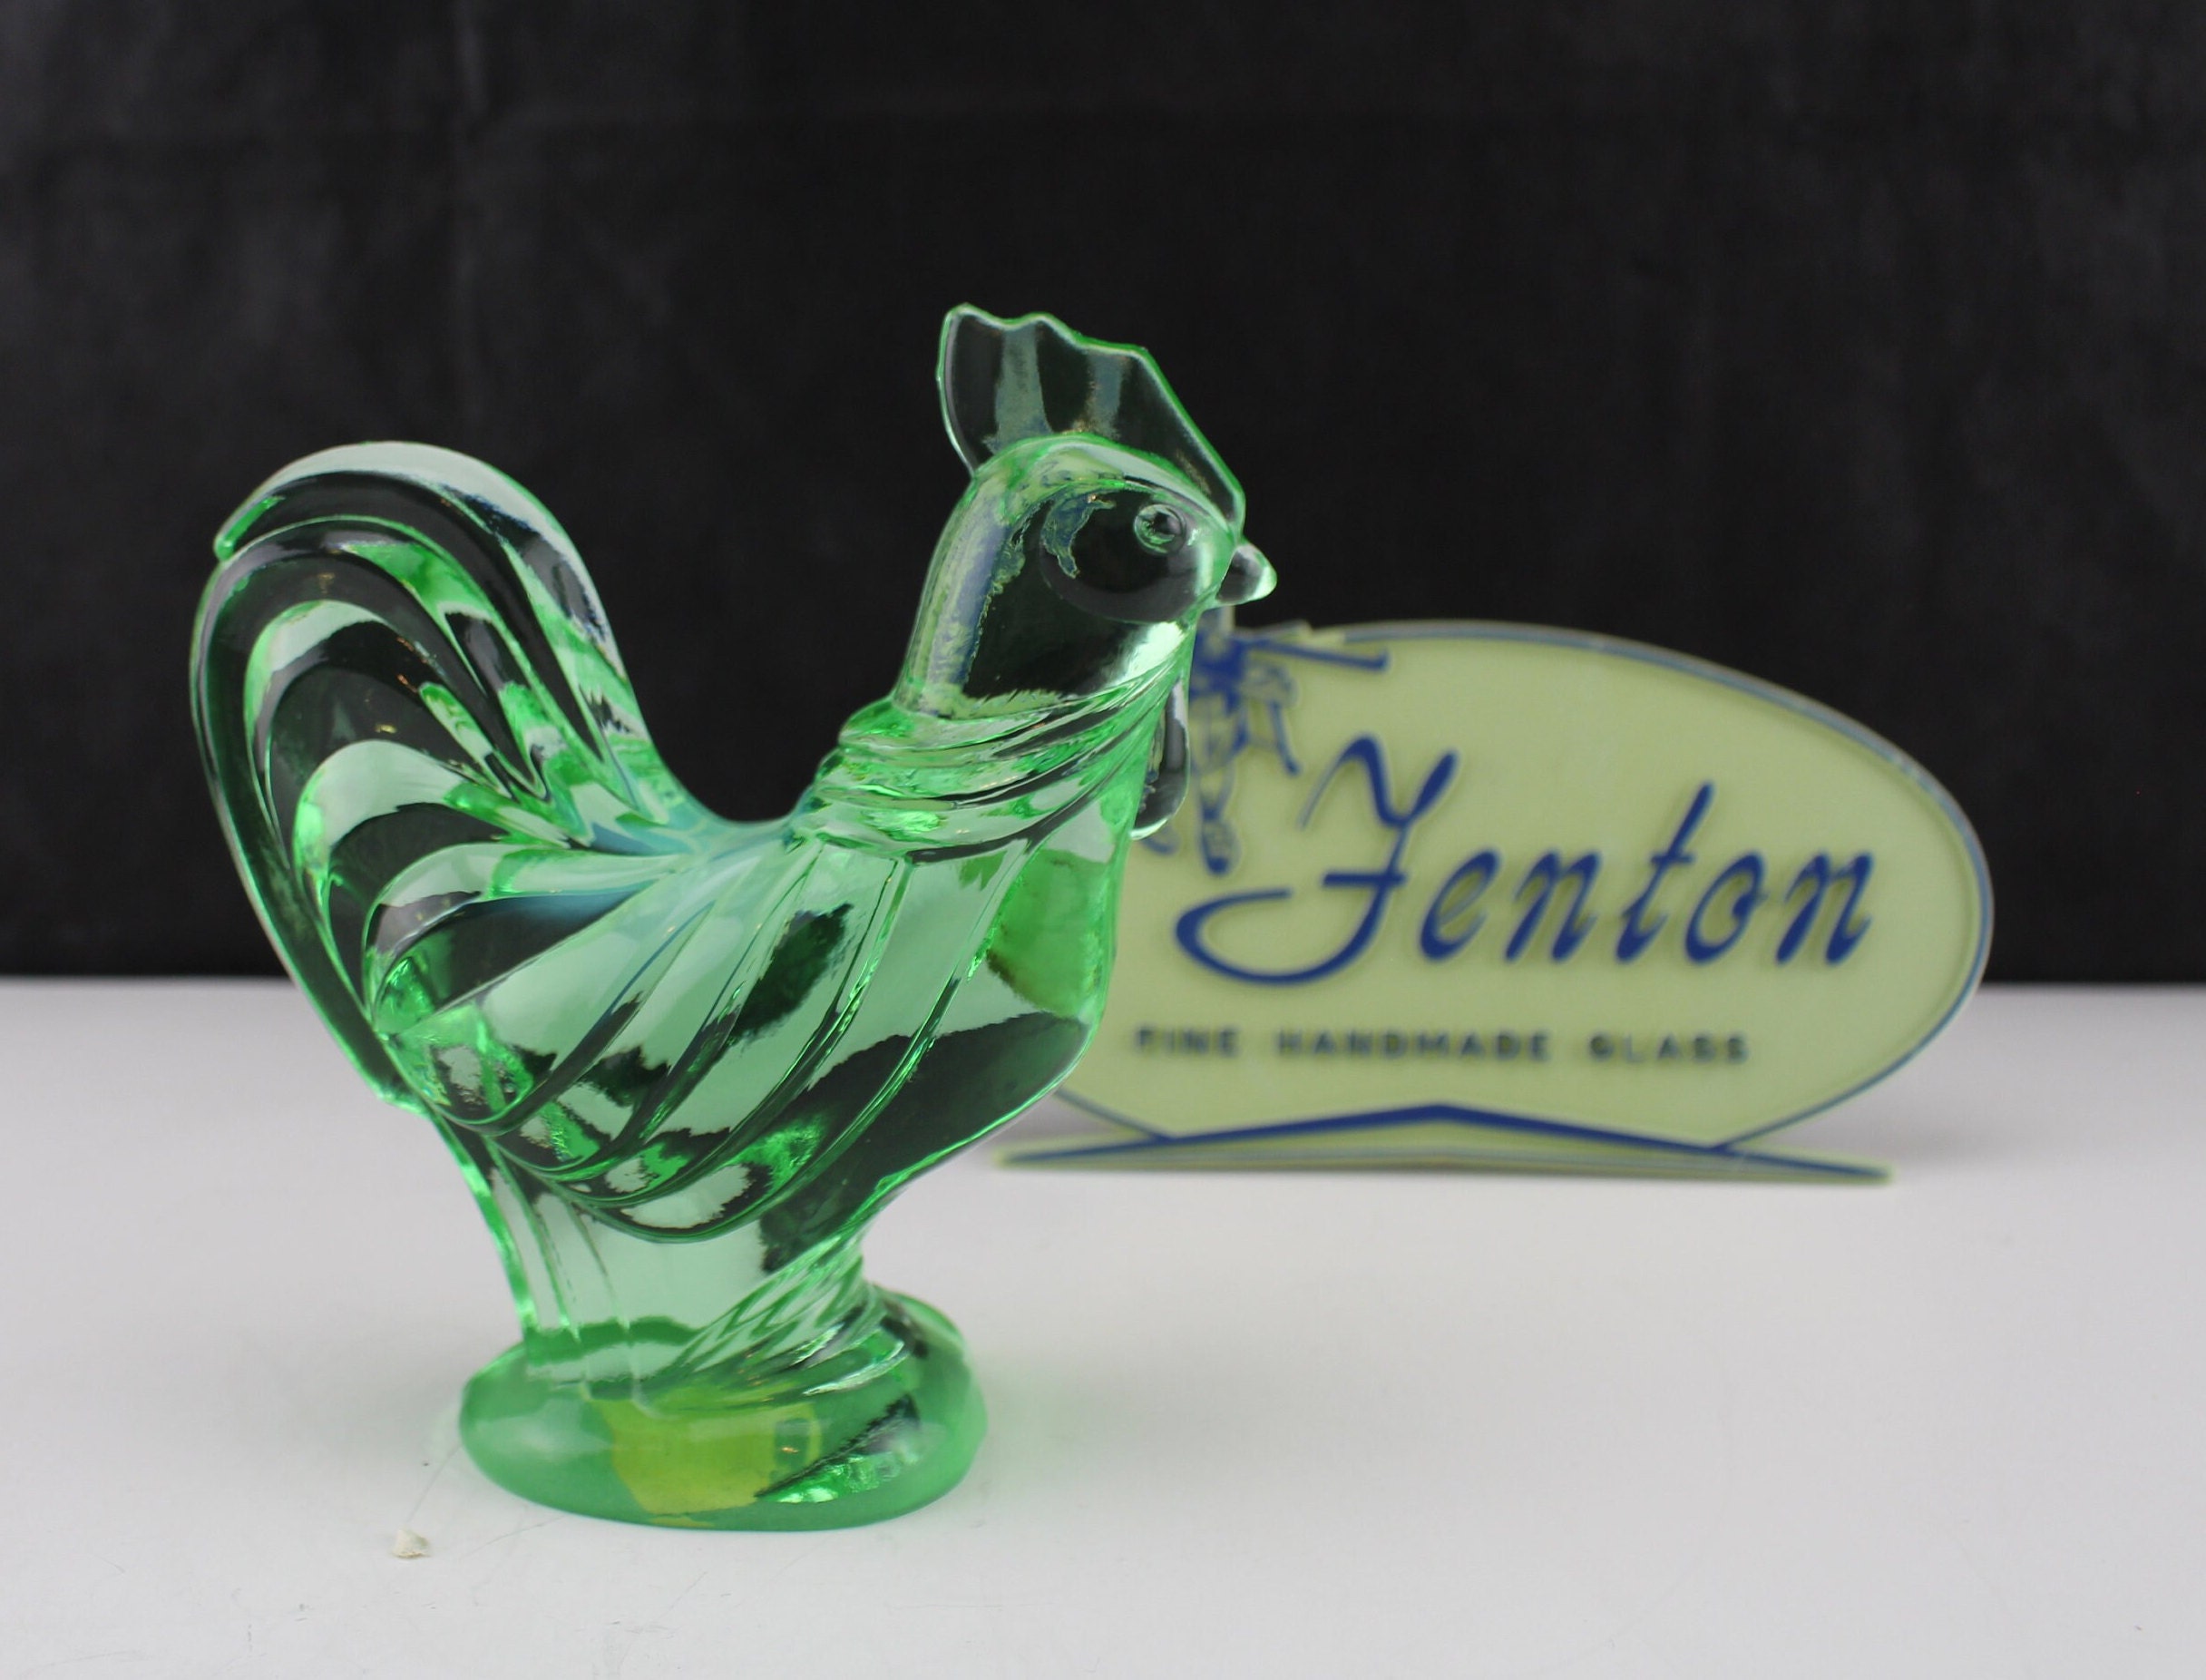 Fenton Artisan Glass Figurine - A Rare Find! - Free Shipping!